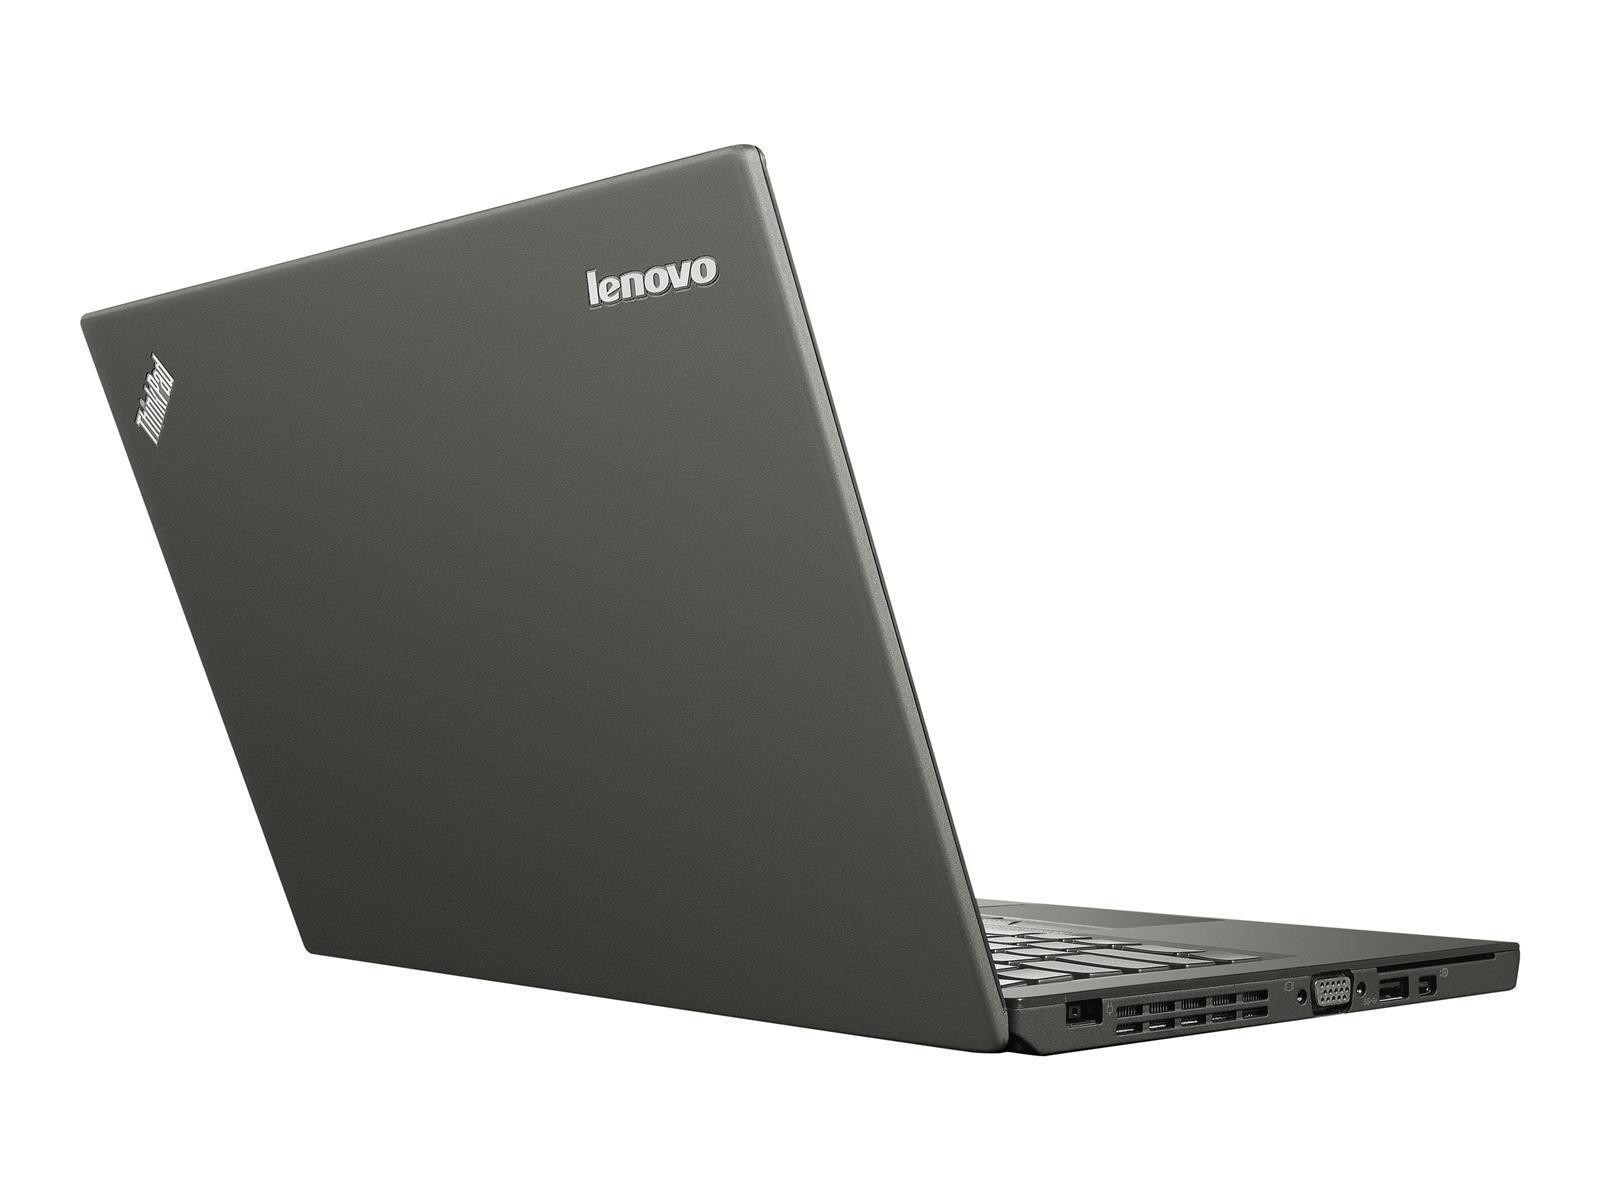 Lenovo ThinkPad X250 Laptop Intel Core i5-5300U 2,3GHz 4GB RAM 256GB SSD W10P QWERTY